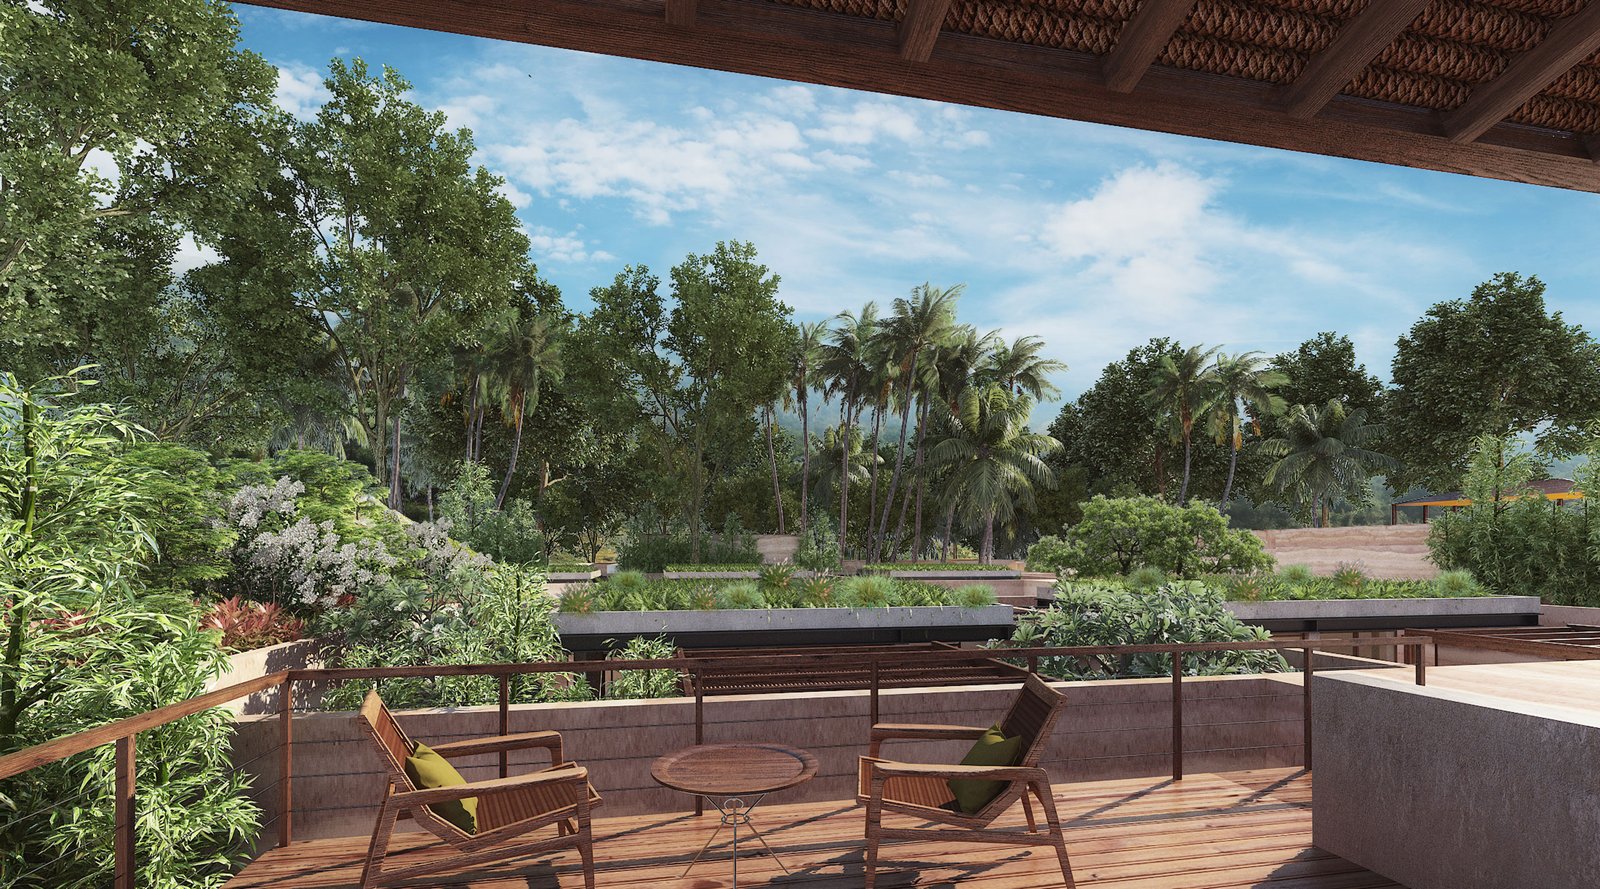 Mandwa Resort - view of landscape